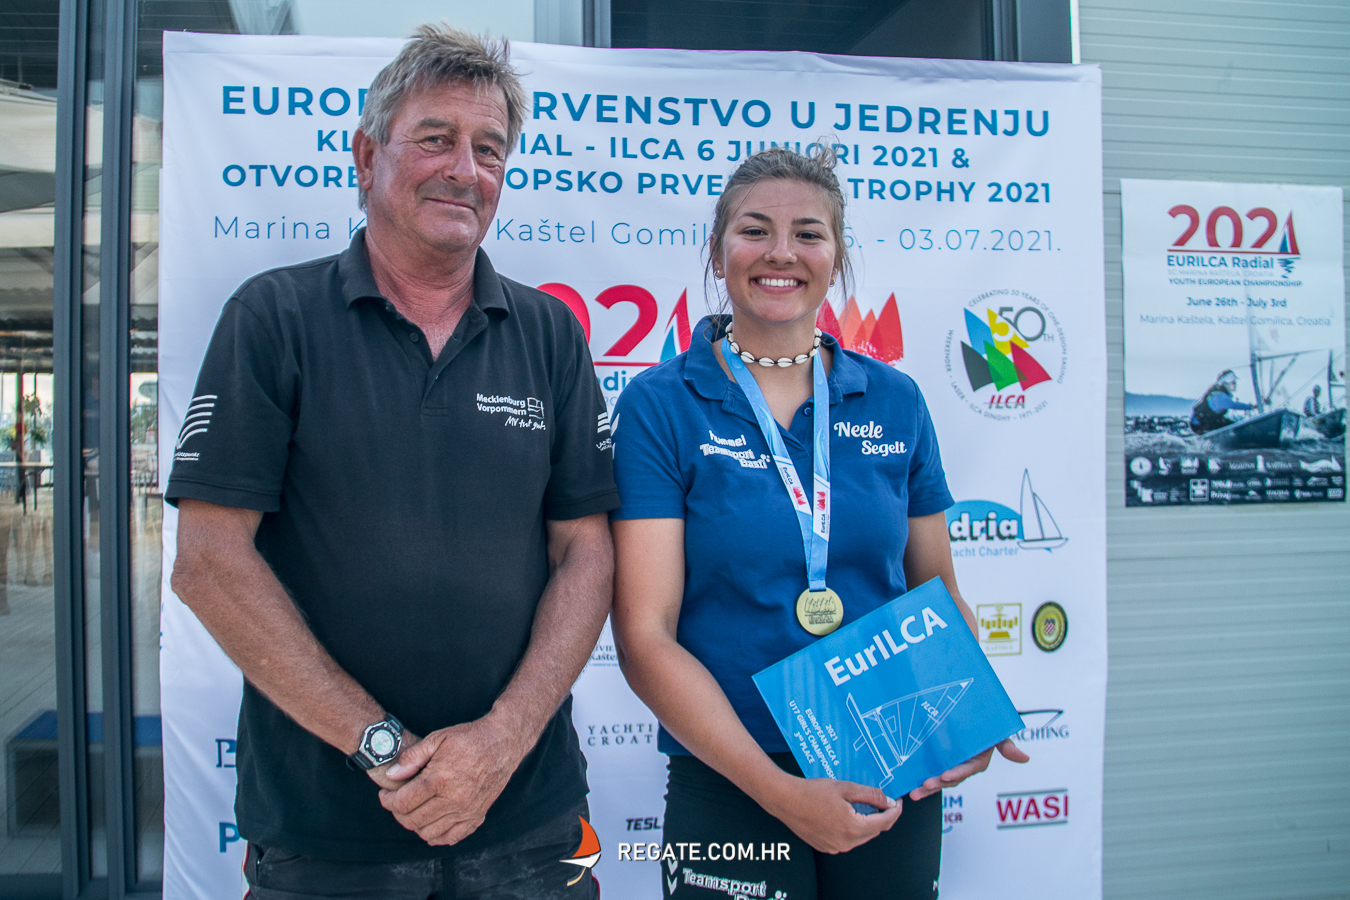 IMG_6795 - EURILCA Radial Youth European Championship - day 6 - 1